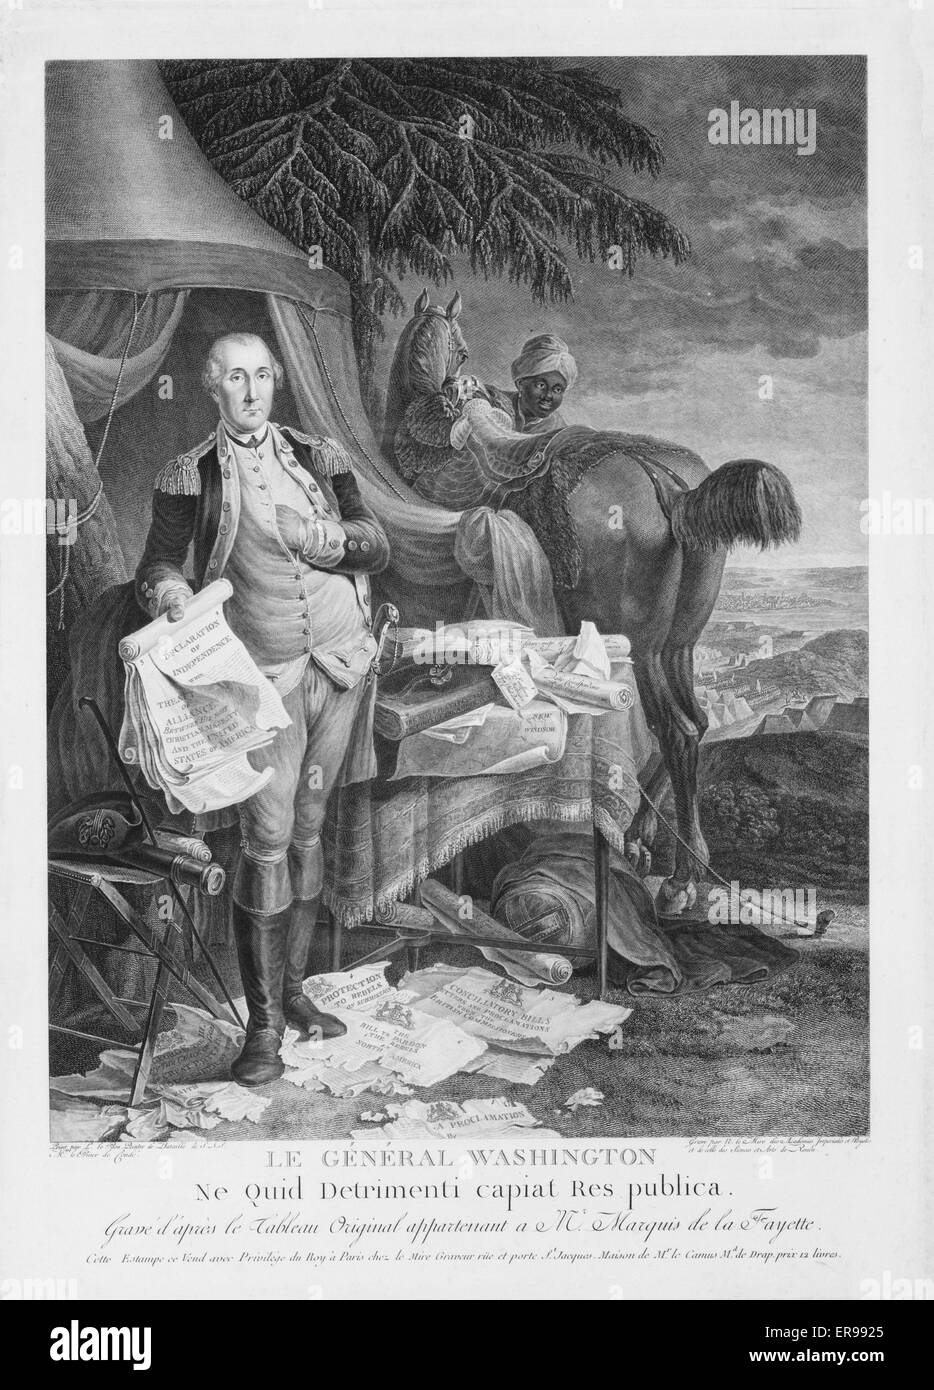 Le General Washington ne quid danni capiat res publica Foto Stock